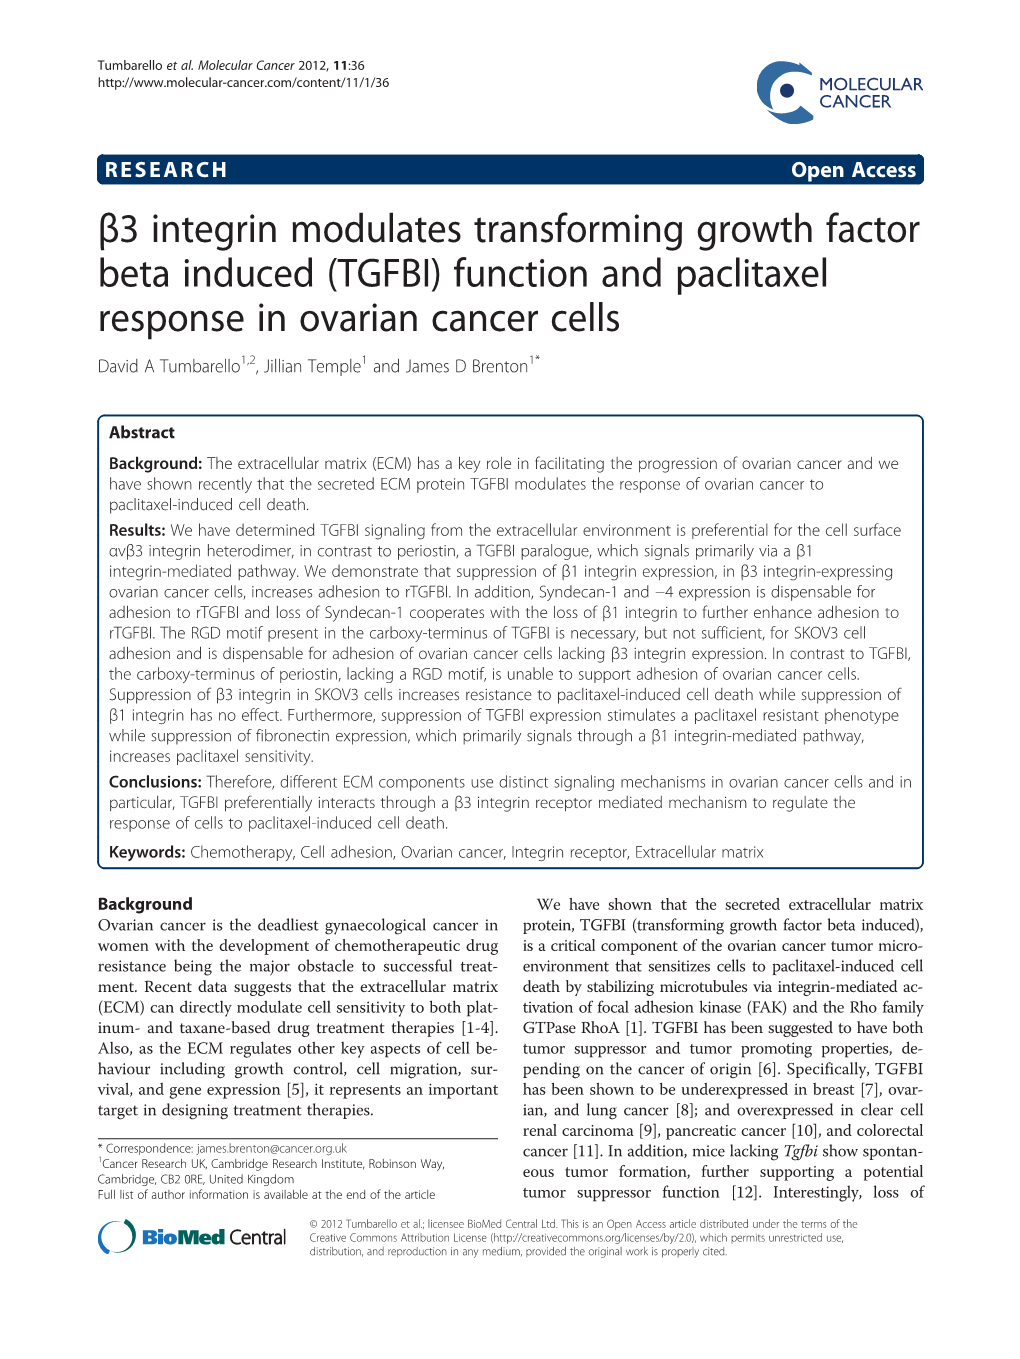 (TGFBI) Function and Paclitaxel Response in Ovarian Cancer Cells David a Tumbarello1,2, Jillian Temple1 and James D Brenton1*